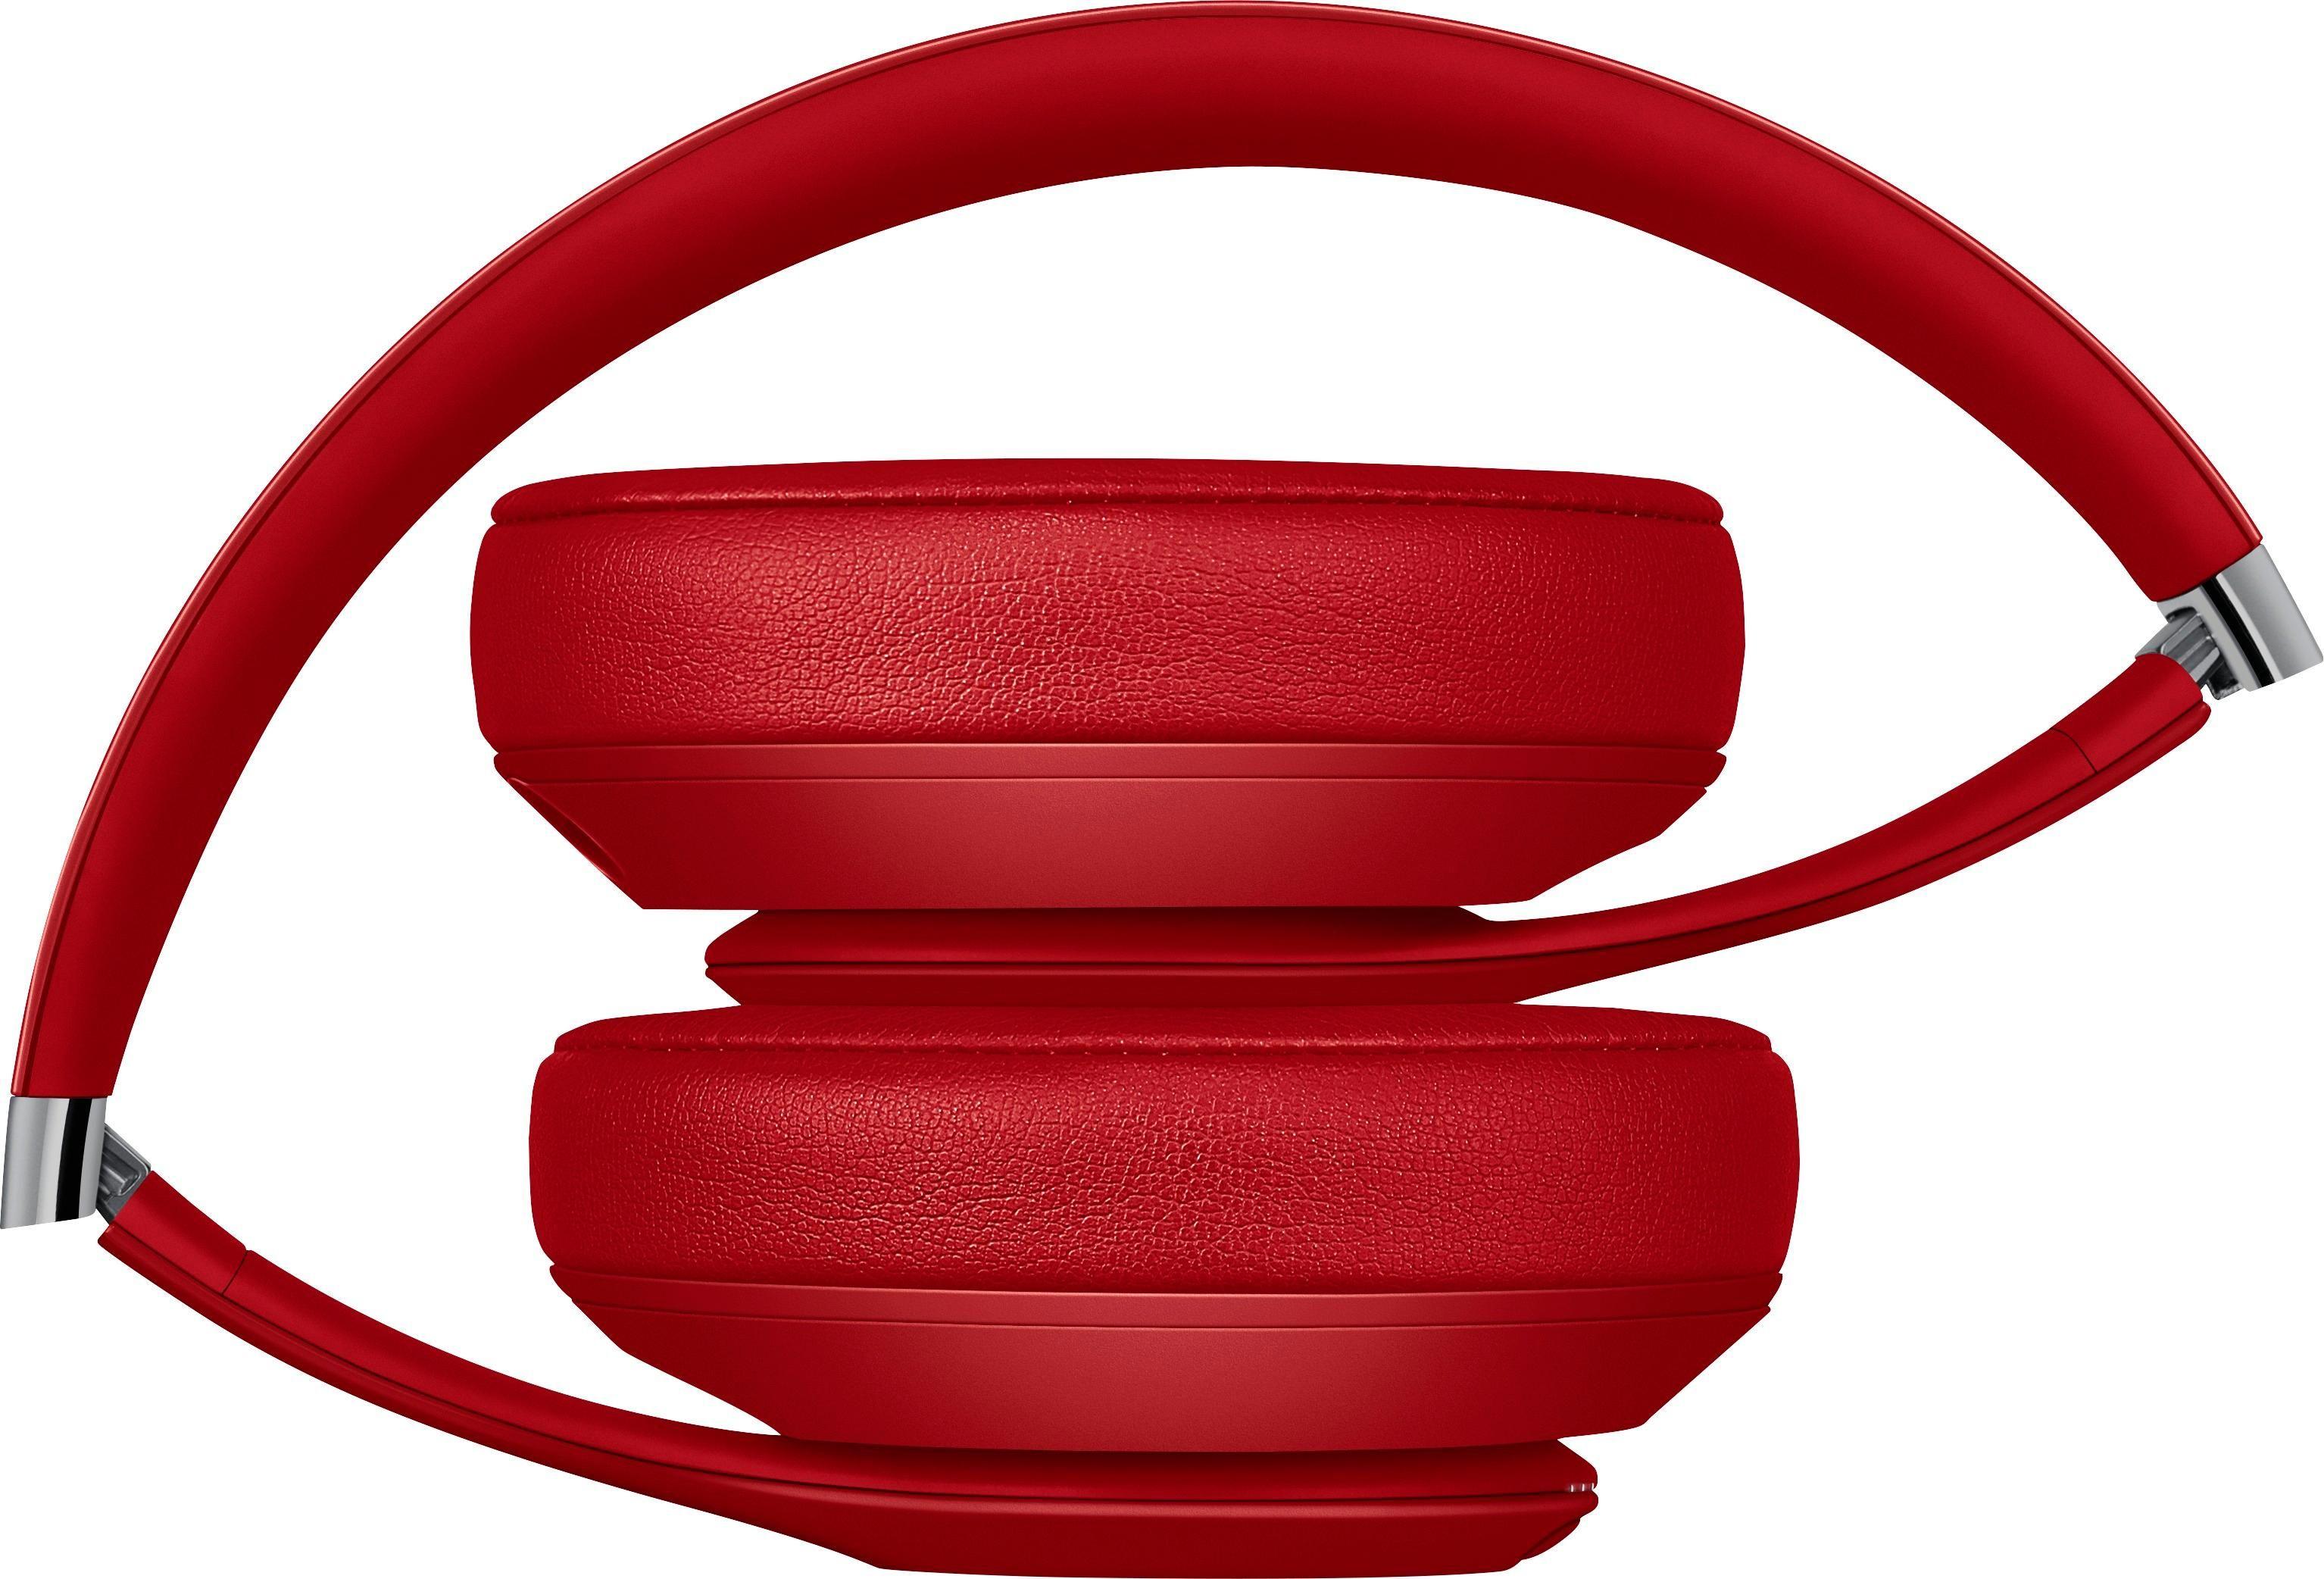 Red Dre Beats Logo - Beats By Dr. Dre Beats Studio³ Wireless Headphones Red MQD02LL A